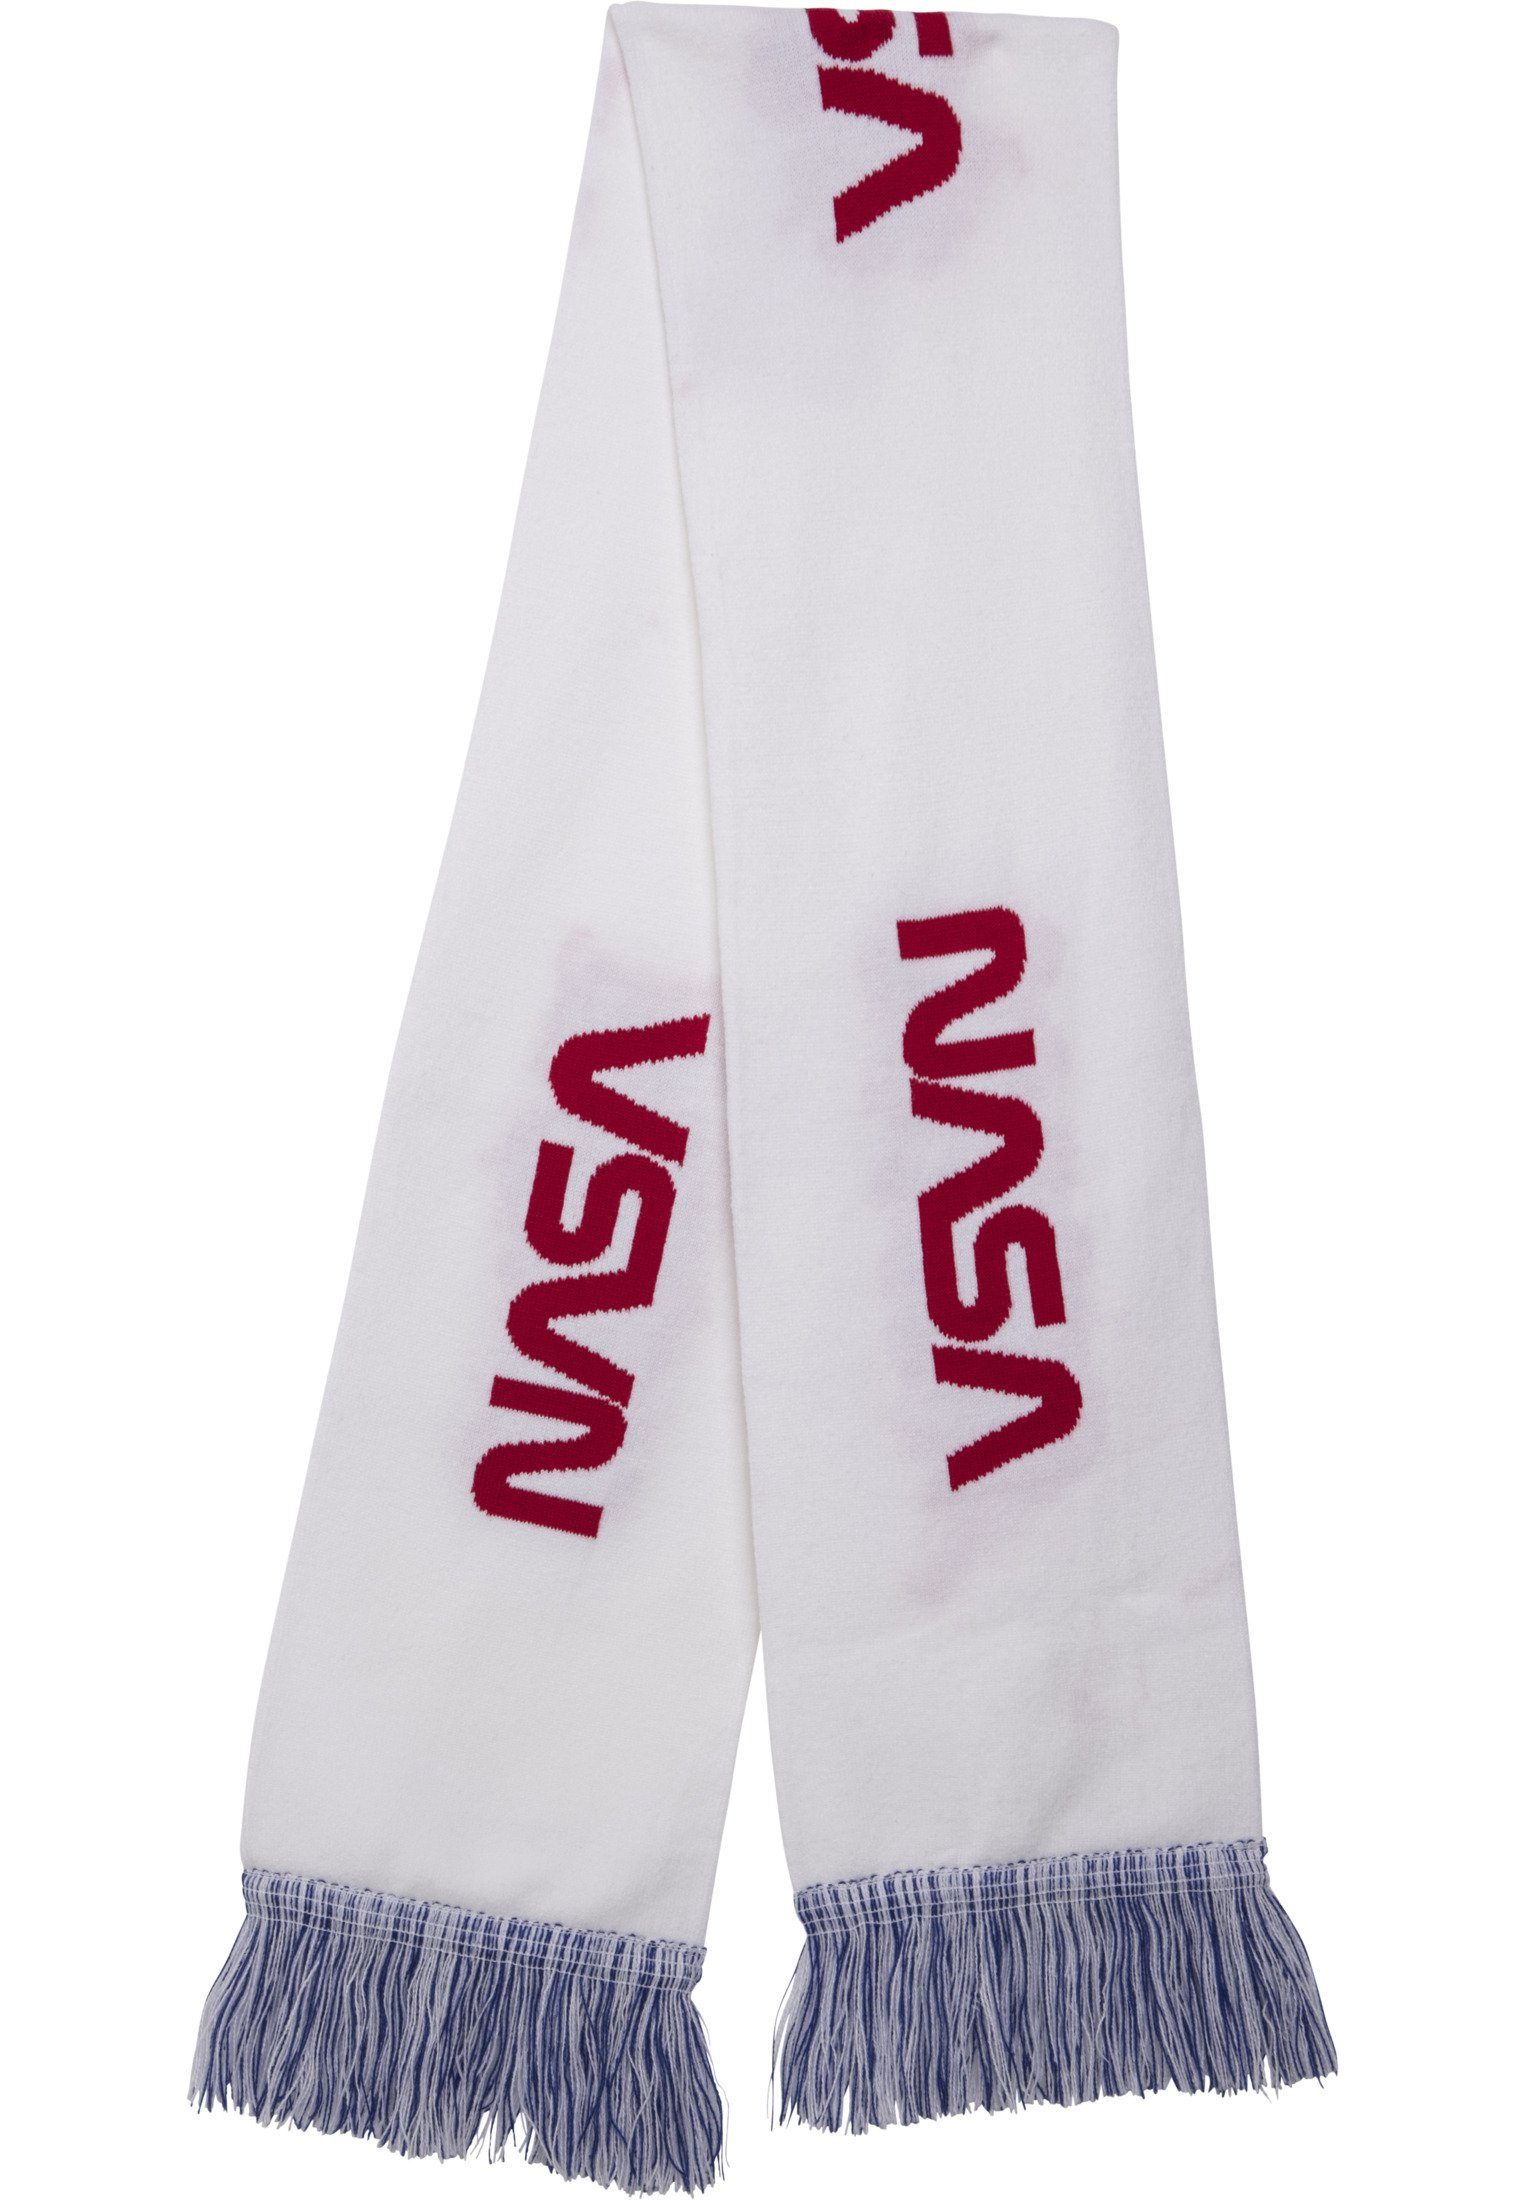 MisterTee Schal Unisex Accessoires (1-St), Knitted, Scarf NASA MT